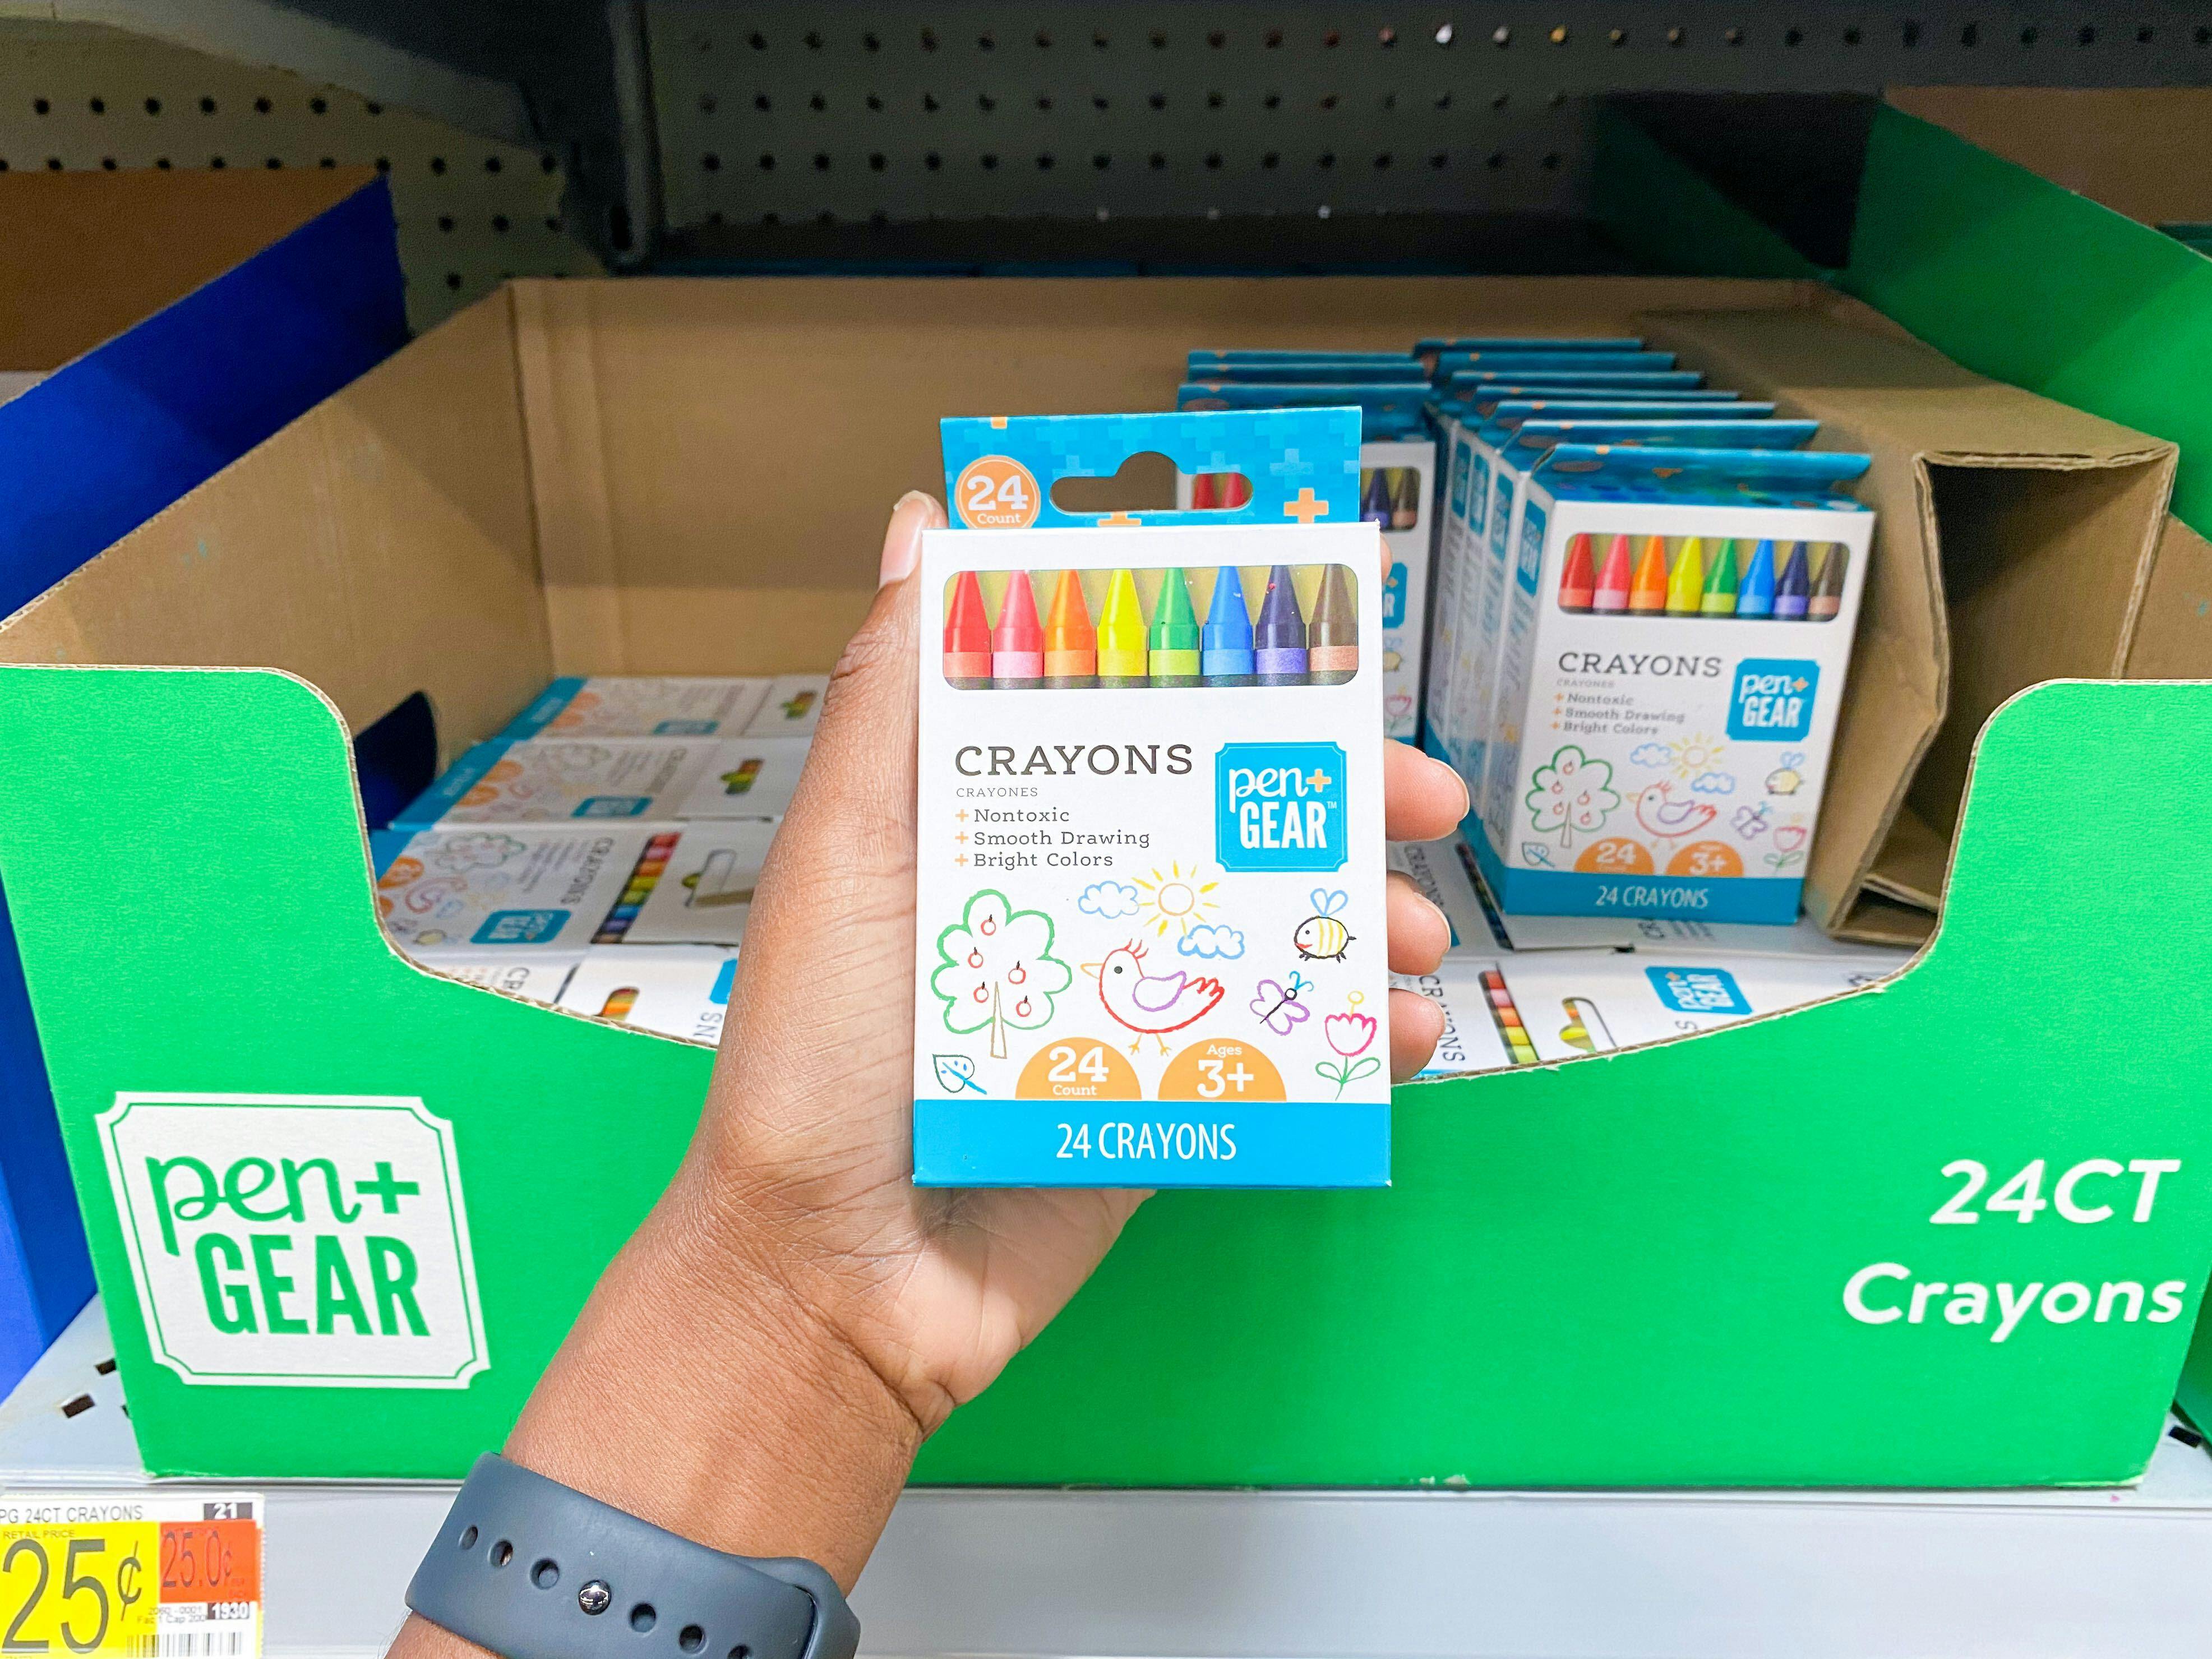 Pen + Gear Crayons held in front of shelf at Walmart